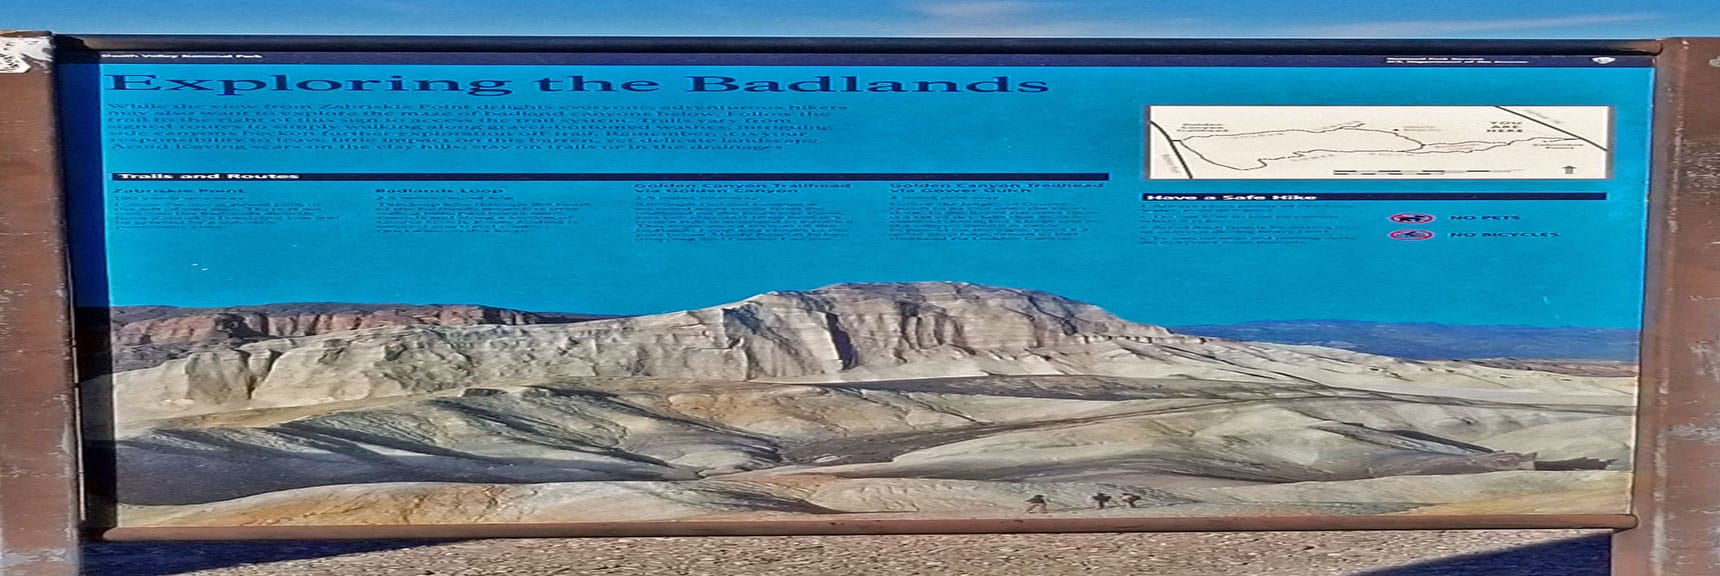 Badland Exploration Interpretive Sign at Zabriskie Point | Golden Canyon to Zabriskie Point | Death Valley National Park, California